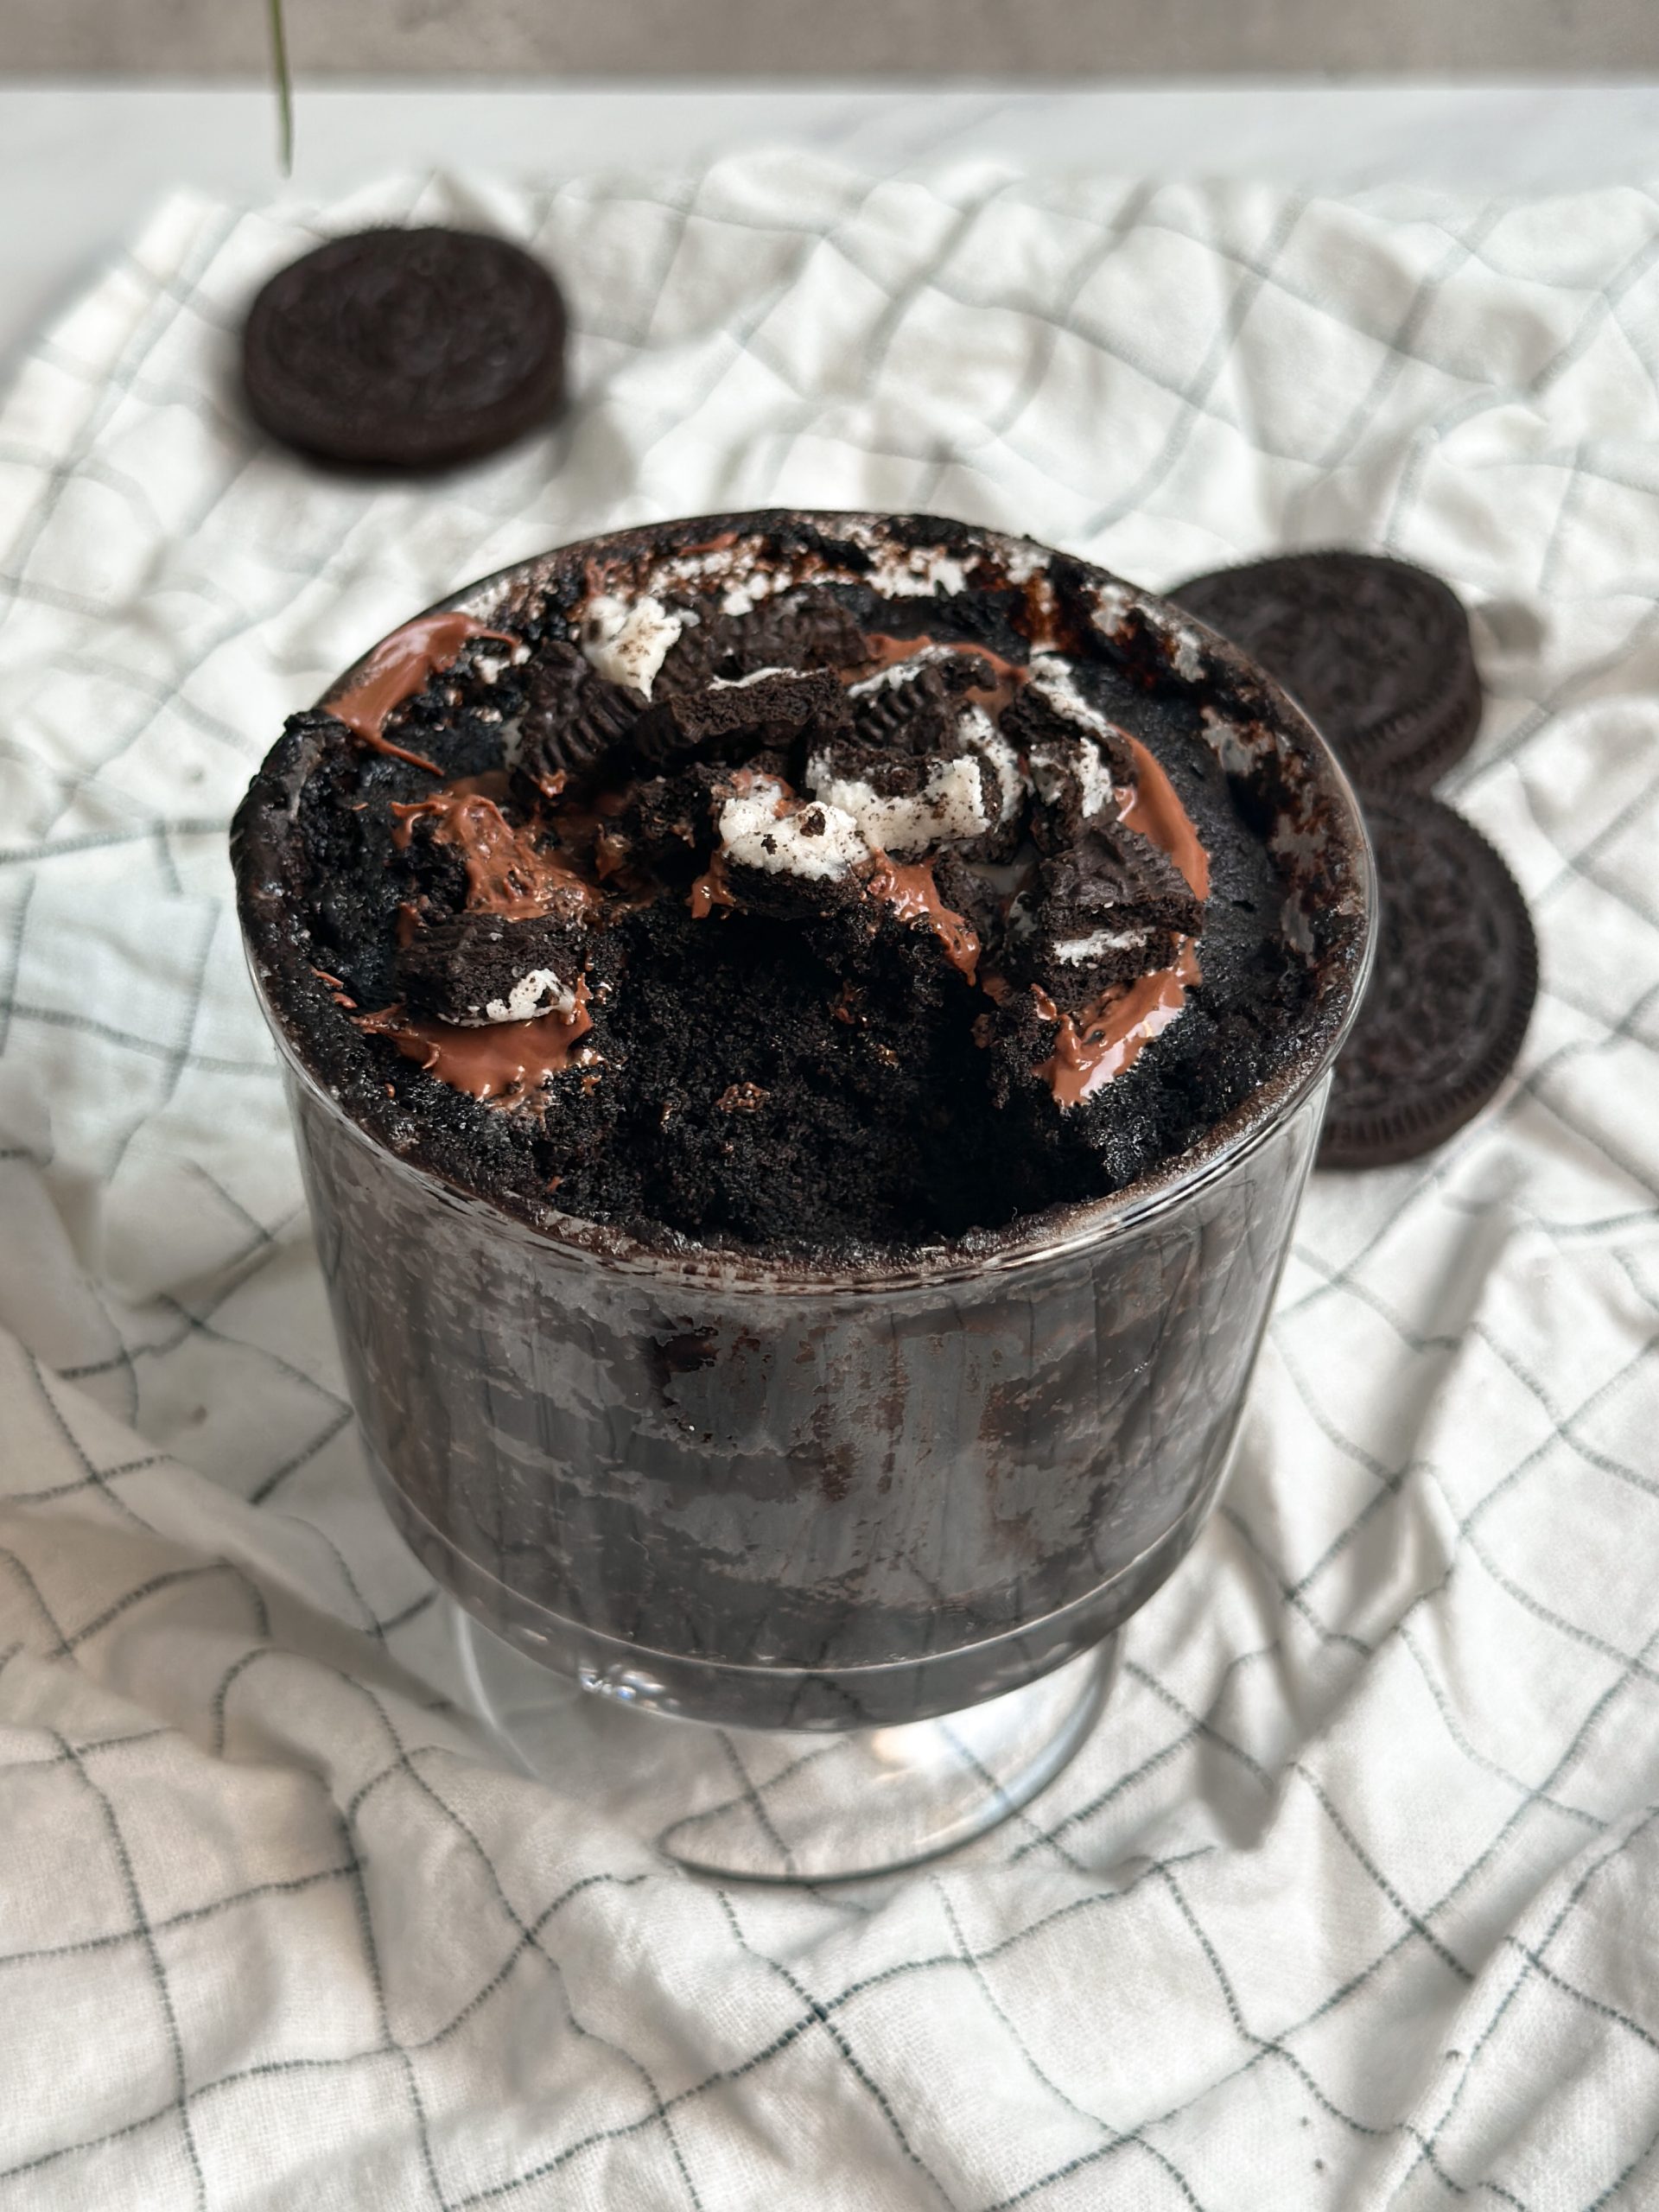 oreo chocolate mug cake with a bite taken out of it revealing moist chocolatey interior